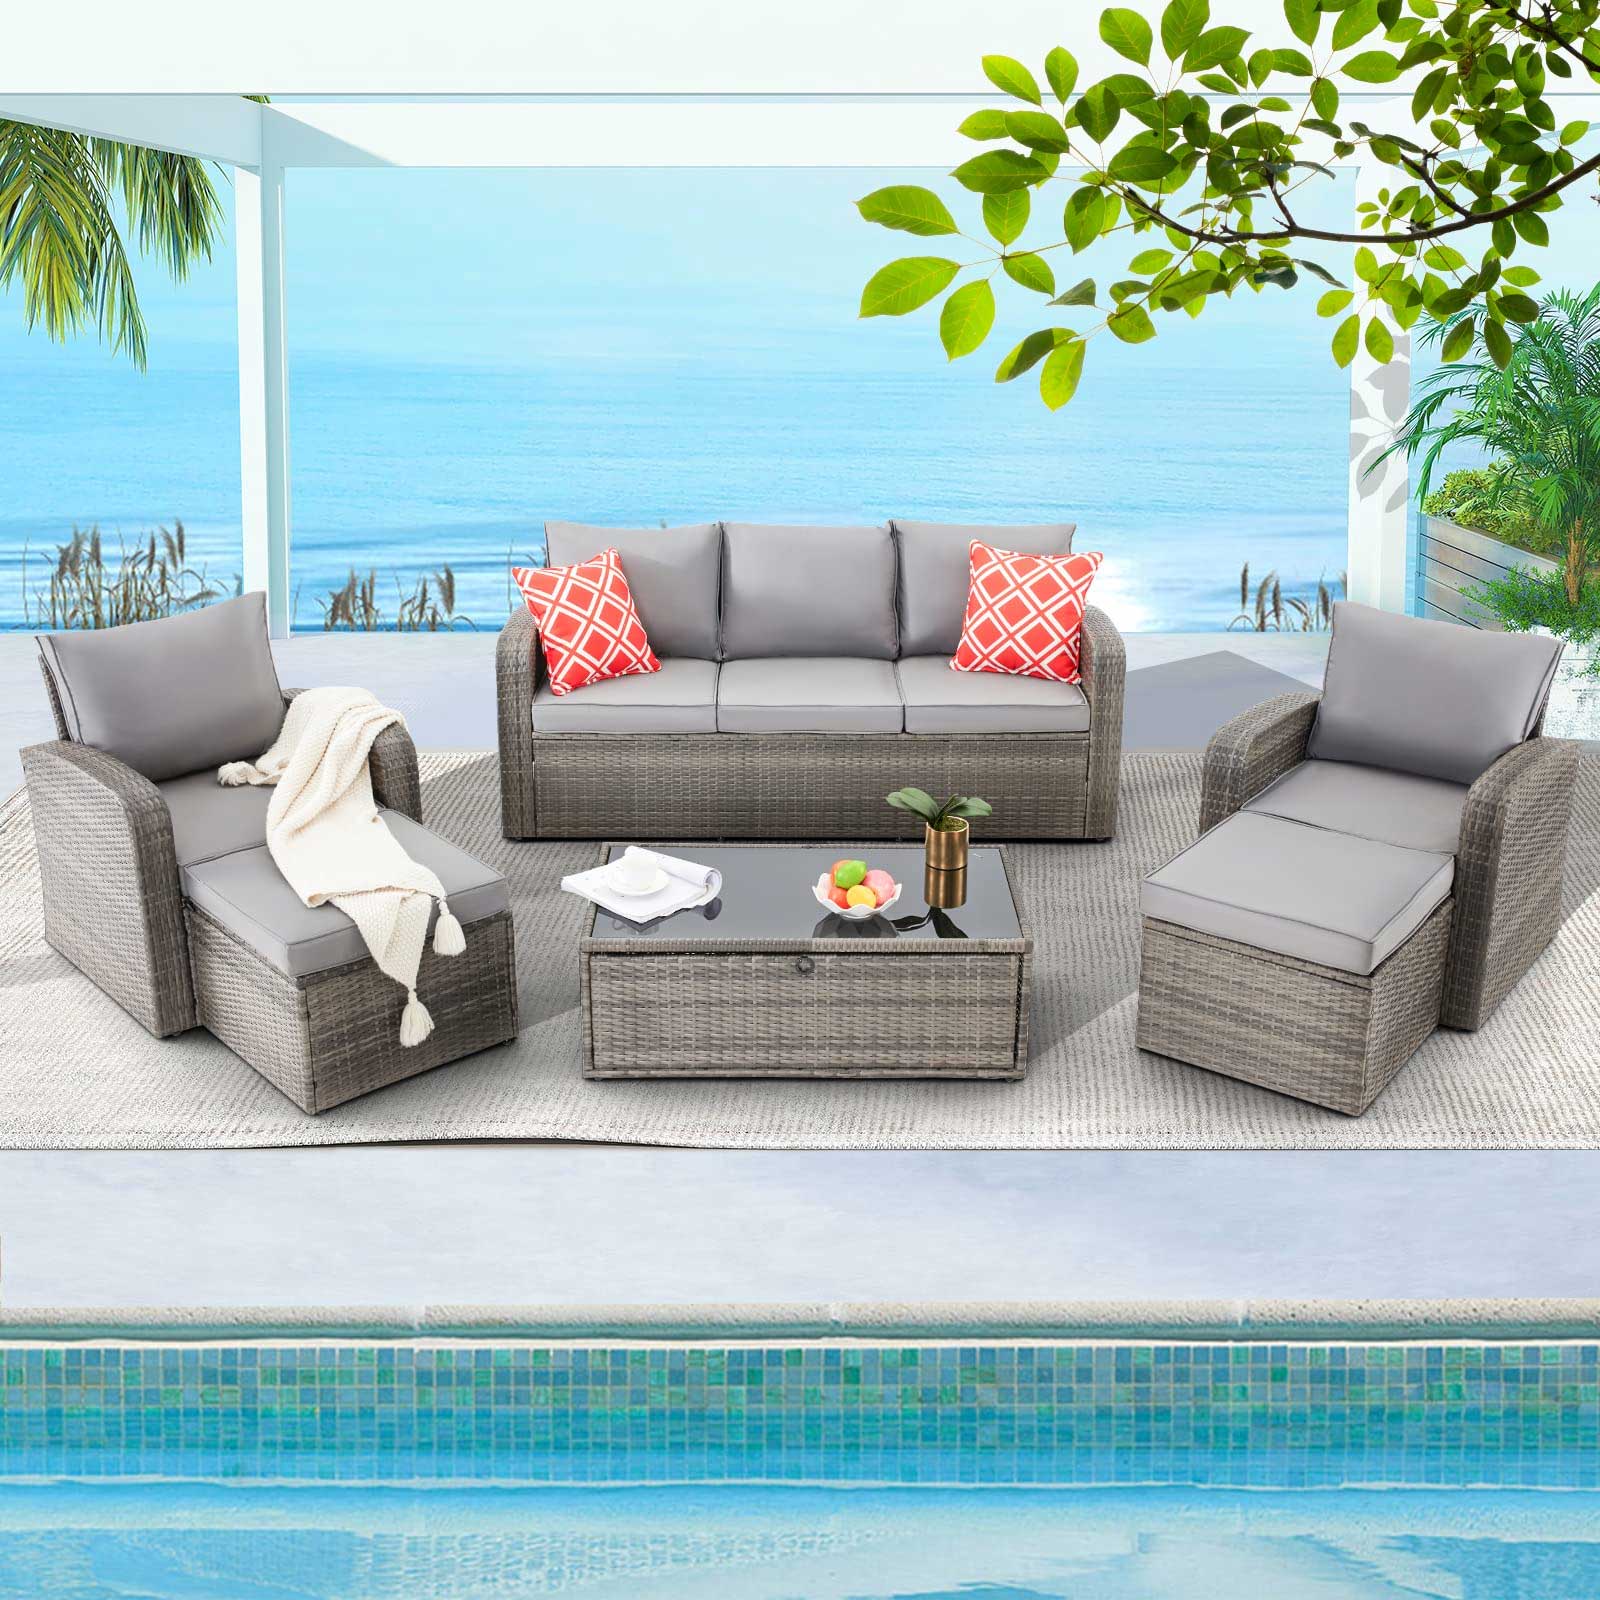 6-pcs-patio-furniture-sets-w-ottomans-cushions-pillows-gray